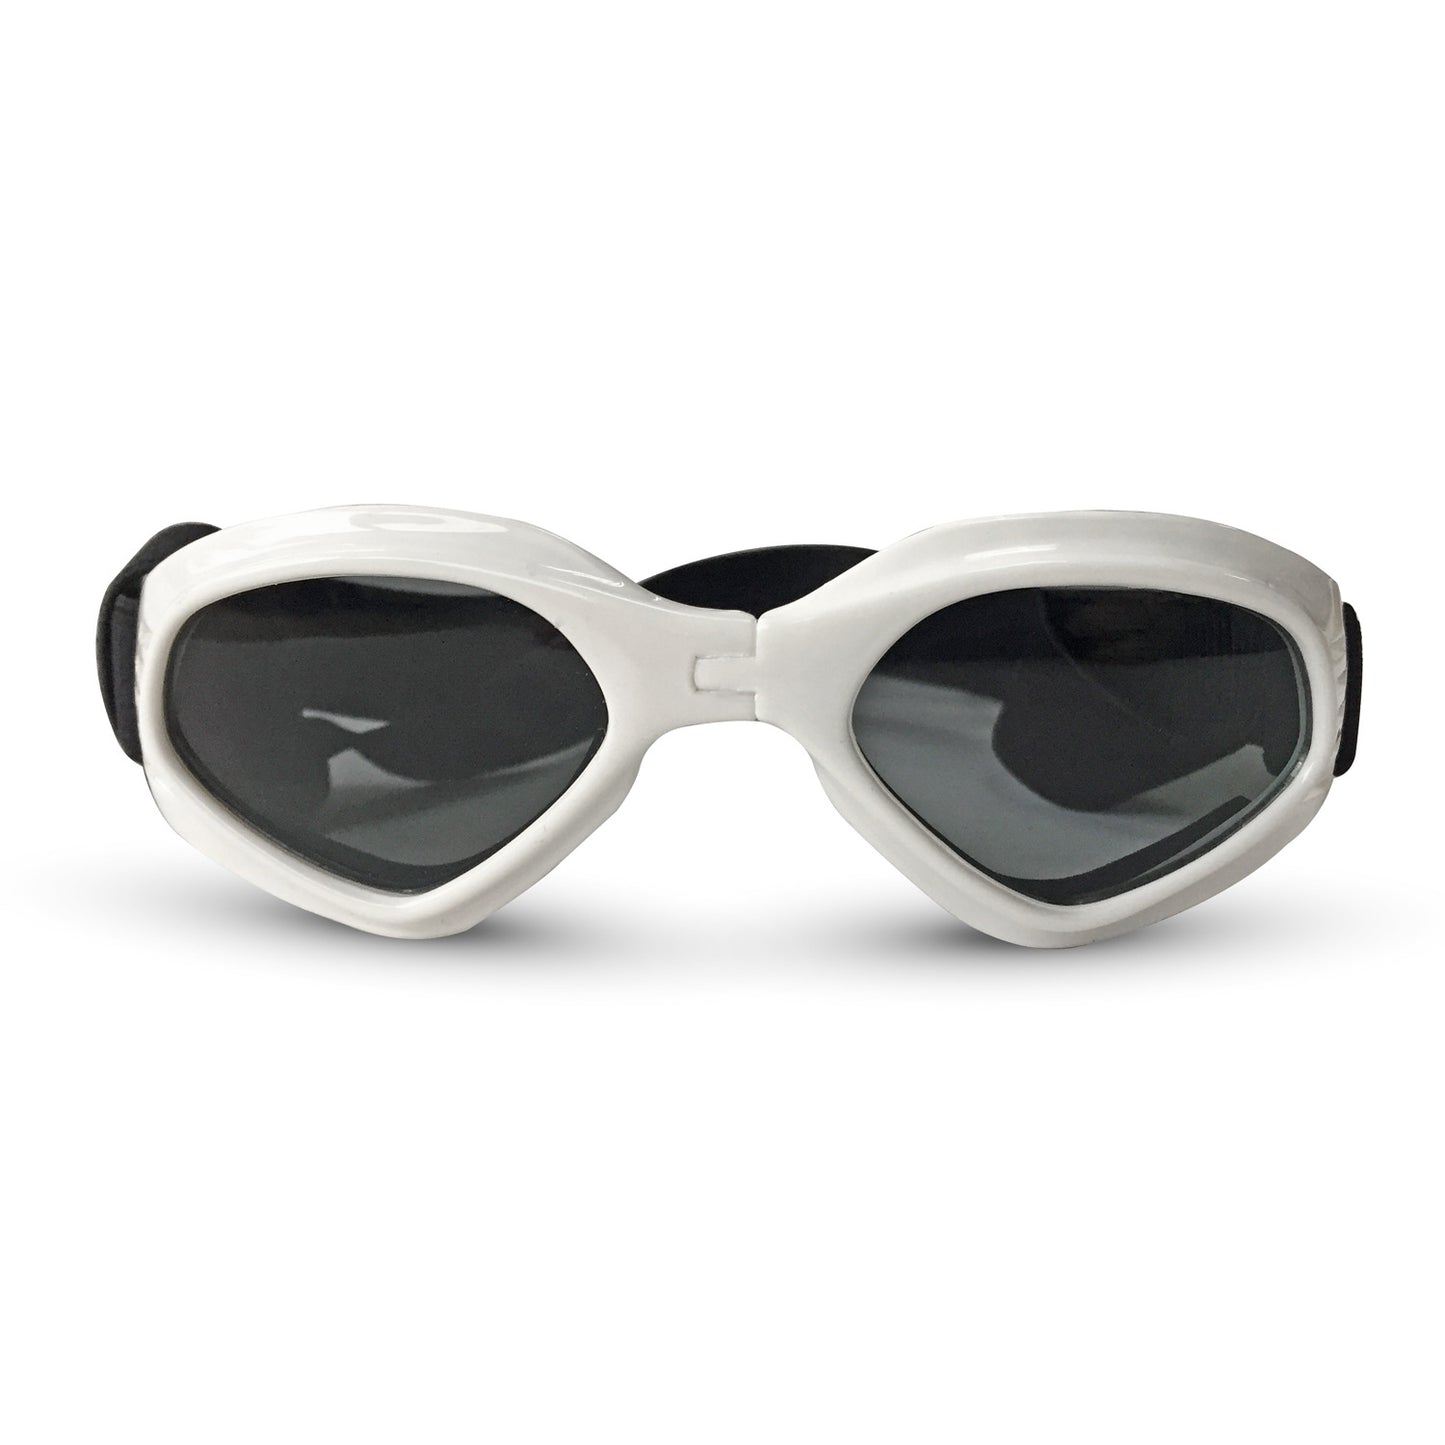 Foldable Puppies Sunglasses Creative Pet Eye Wear